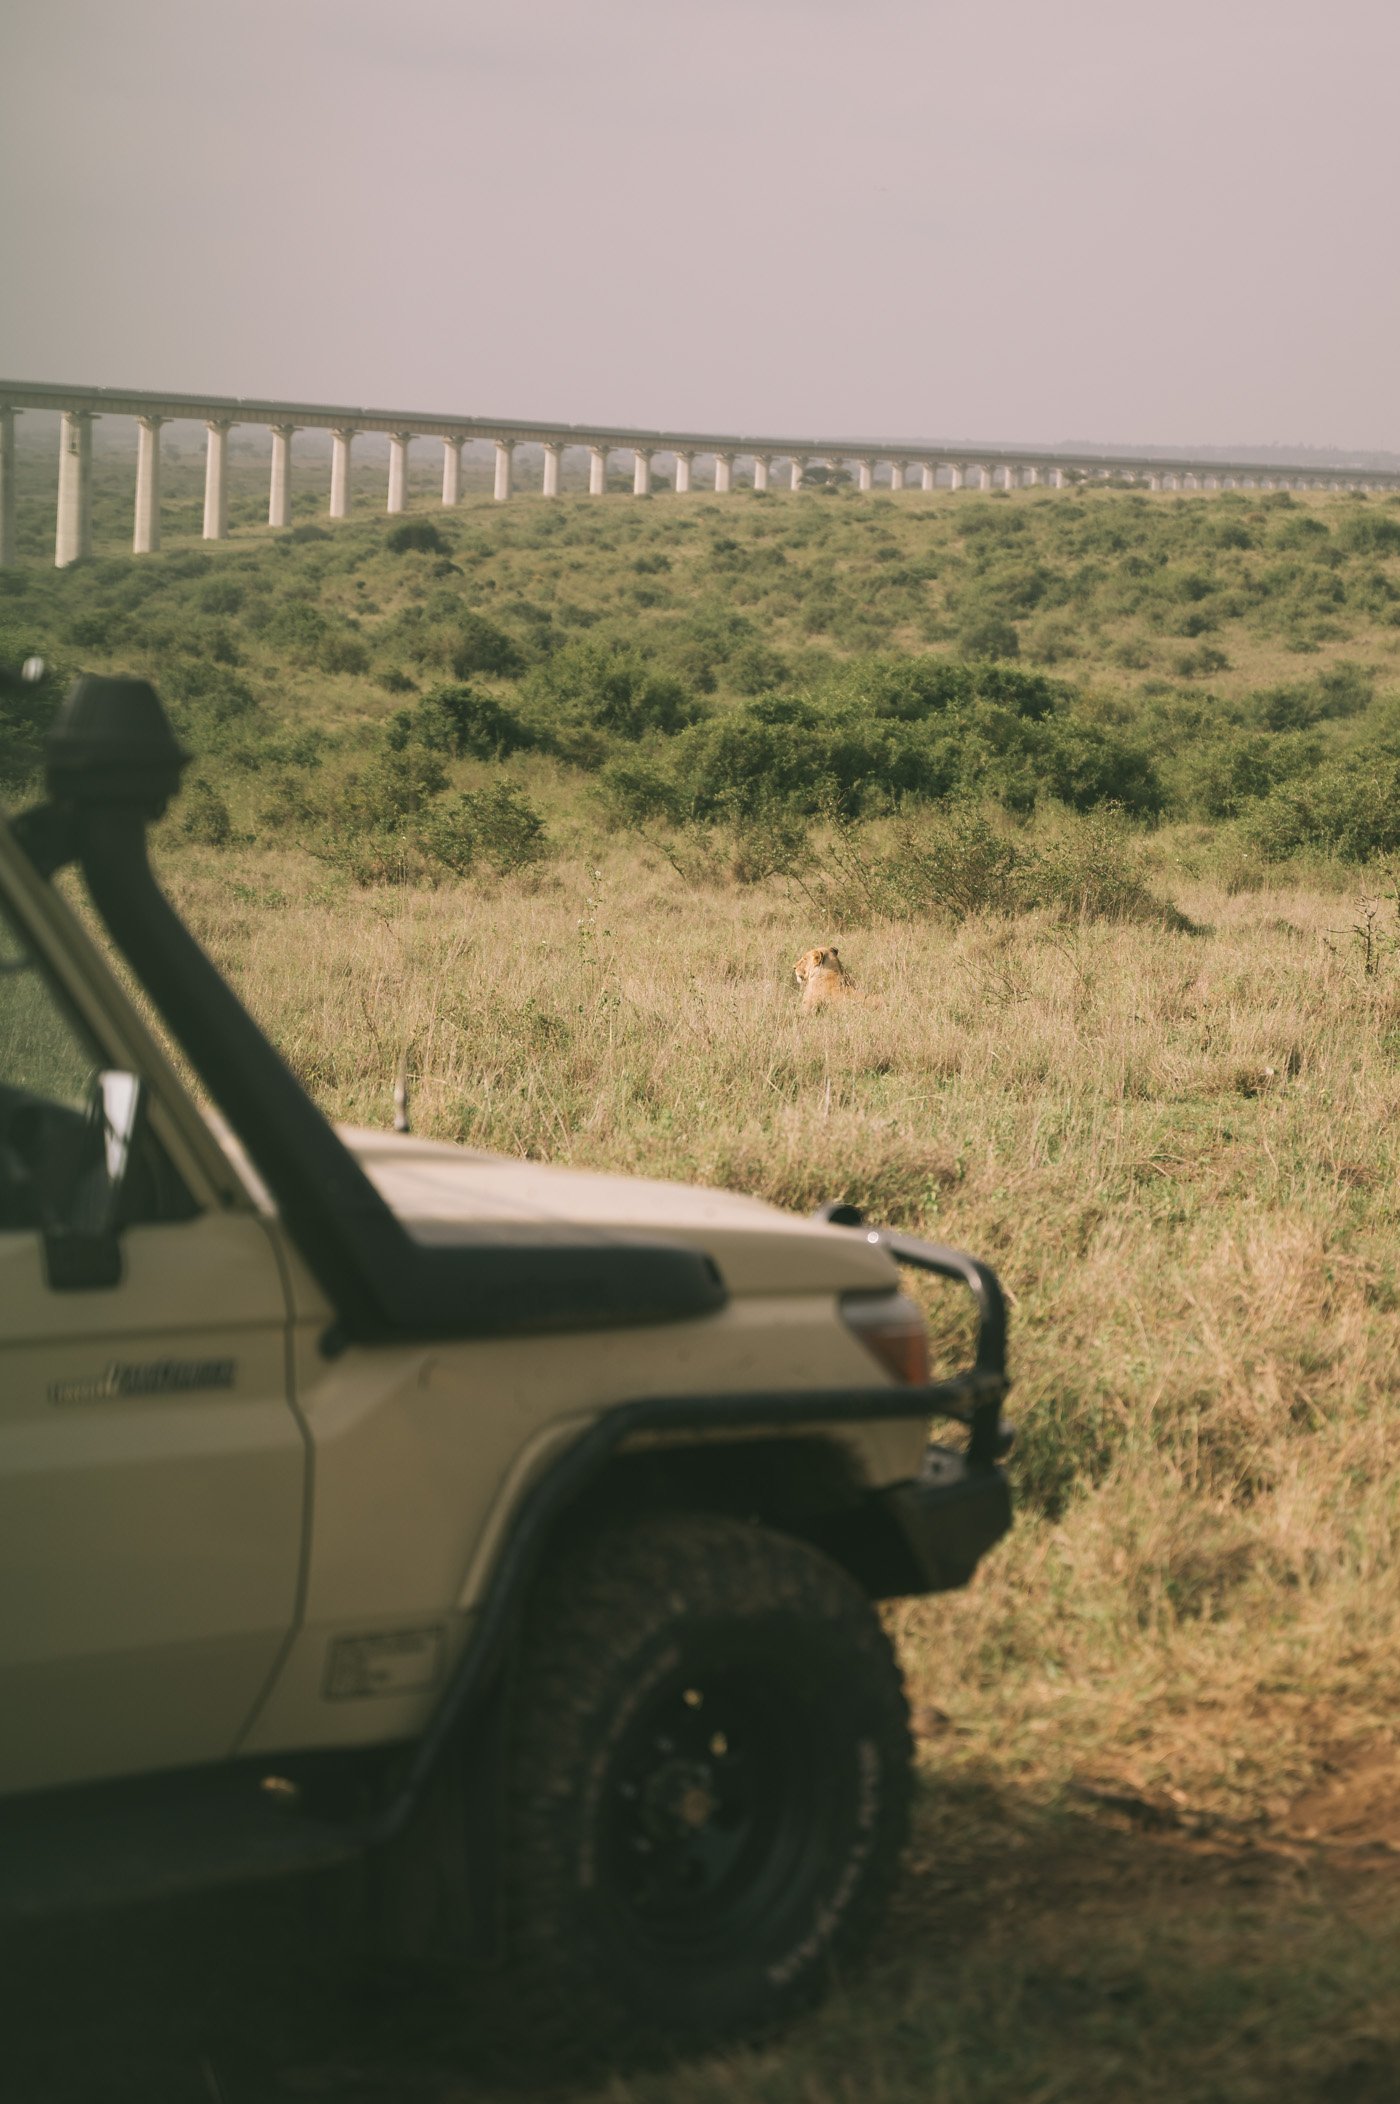 Lion at Nairobi National Park Kenya